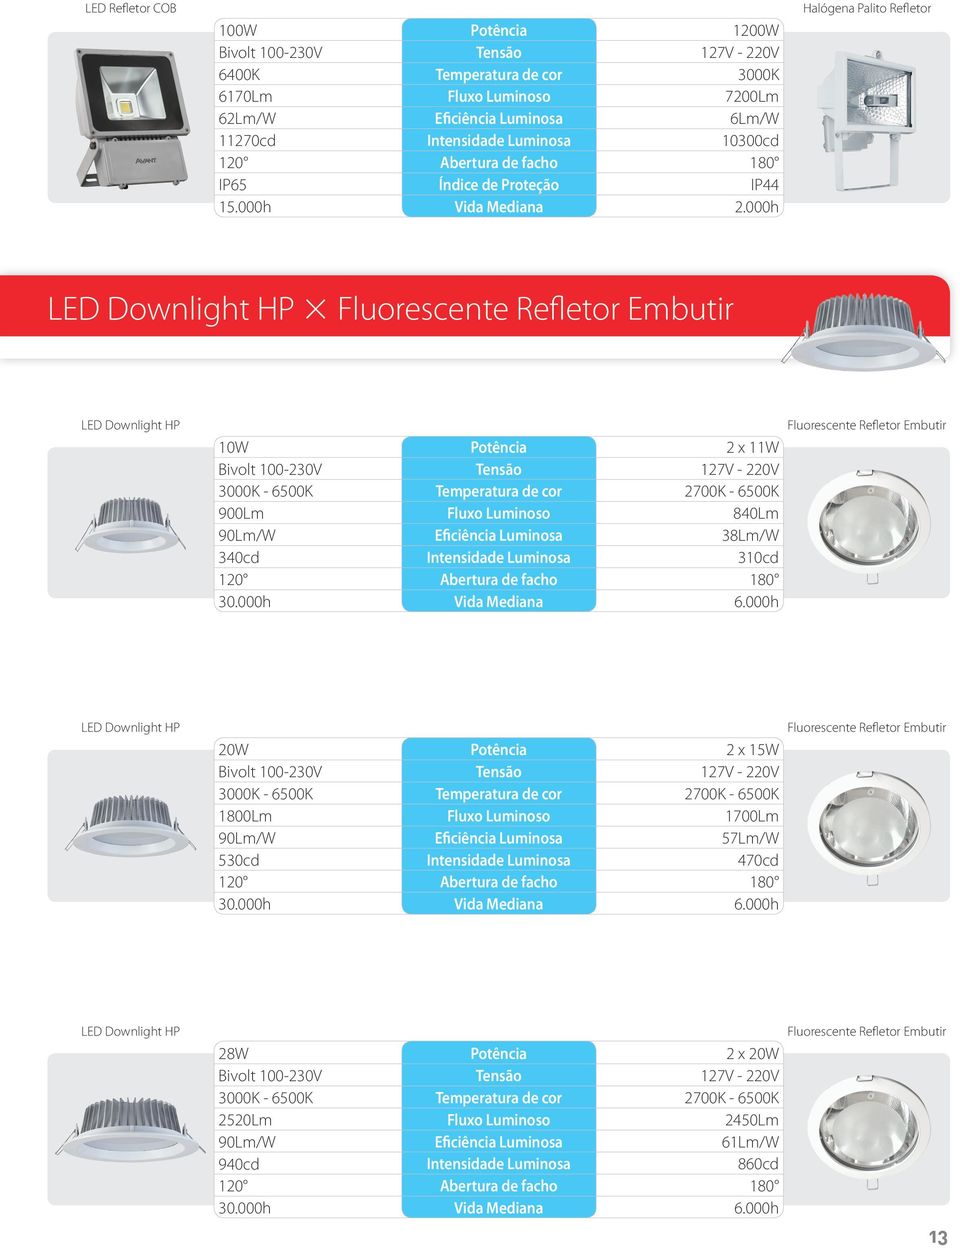 000h Halógena Palito Refletor LED Downlight HP 3 Fluorescente Refletor Embutir LED Downlight HP 10W Potência 2 x 11W 3000K - 6500K Temperatura de cor 2700K - 6500K 900Lm Fluxo Luminoso 840Lm 90Lm/W